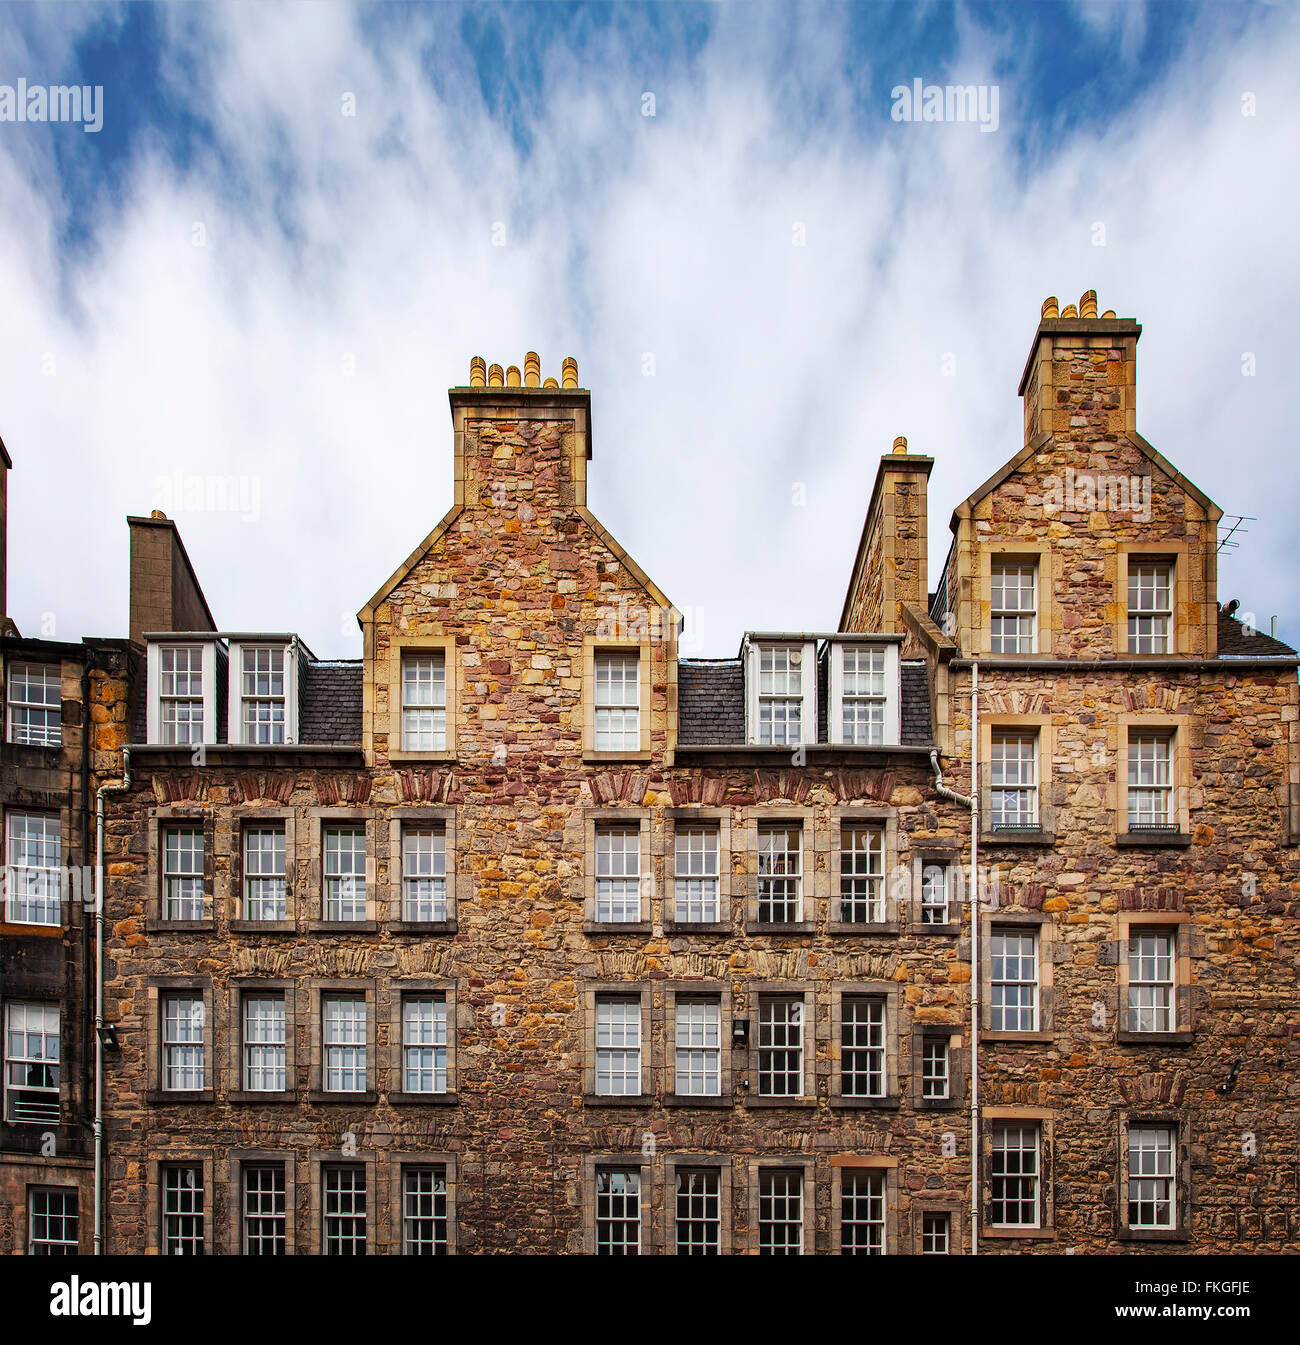 Image of traditional red sandstone buildings in Edinburgh, Scotland. Stock Photo